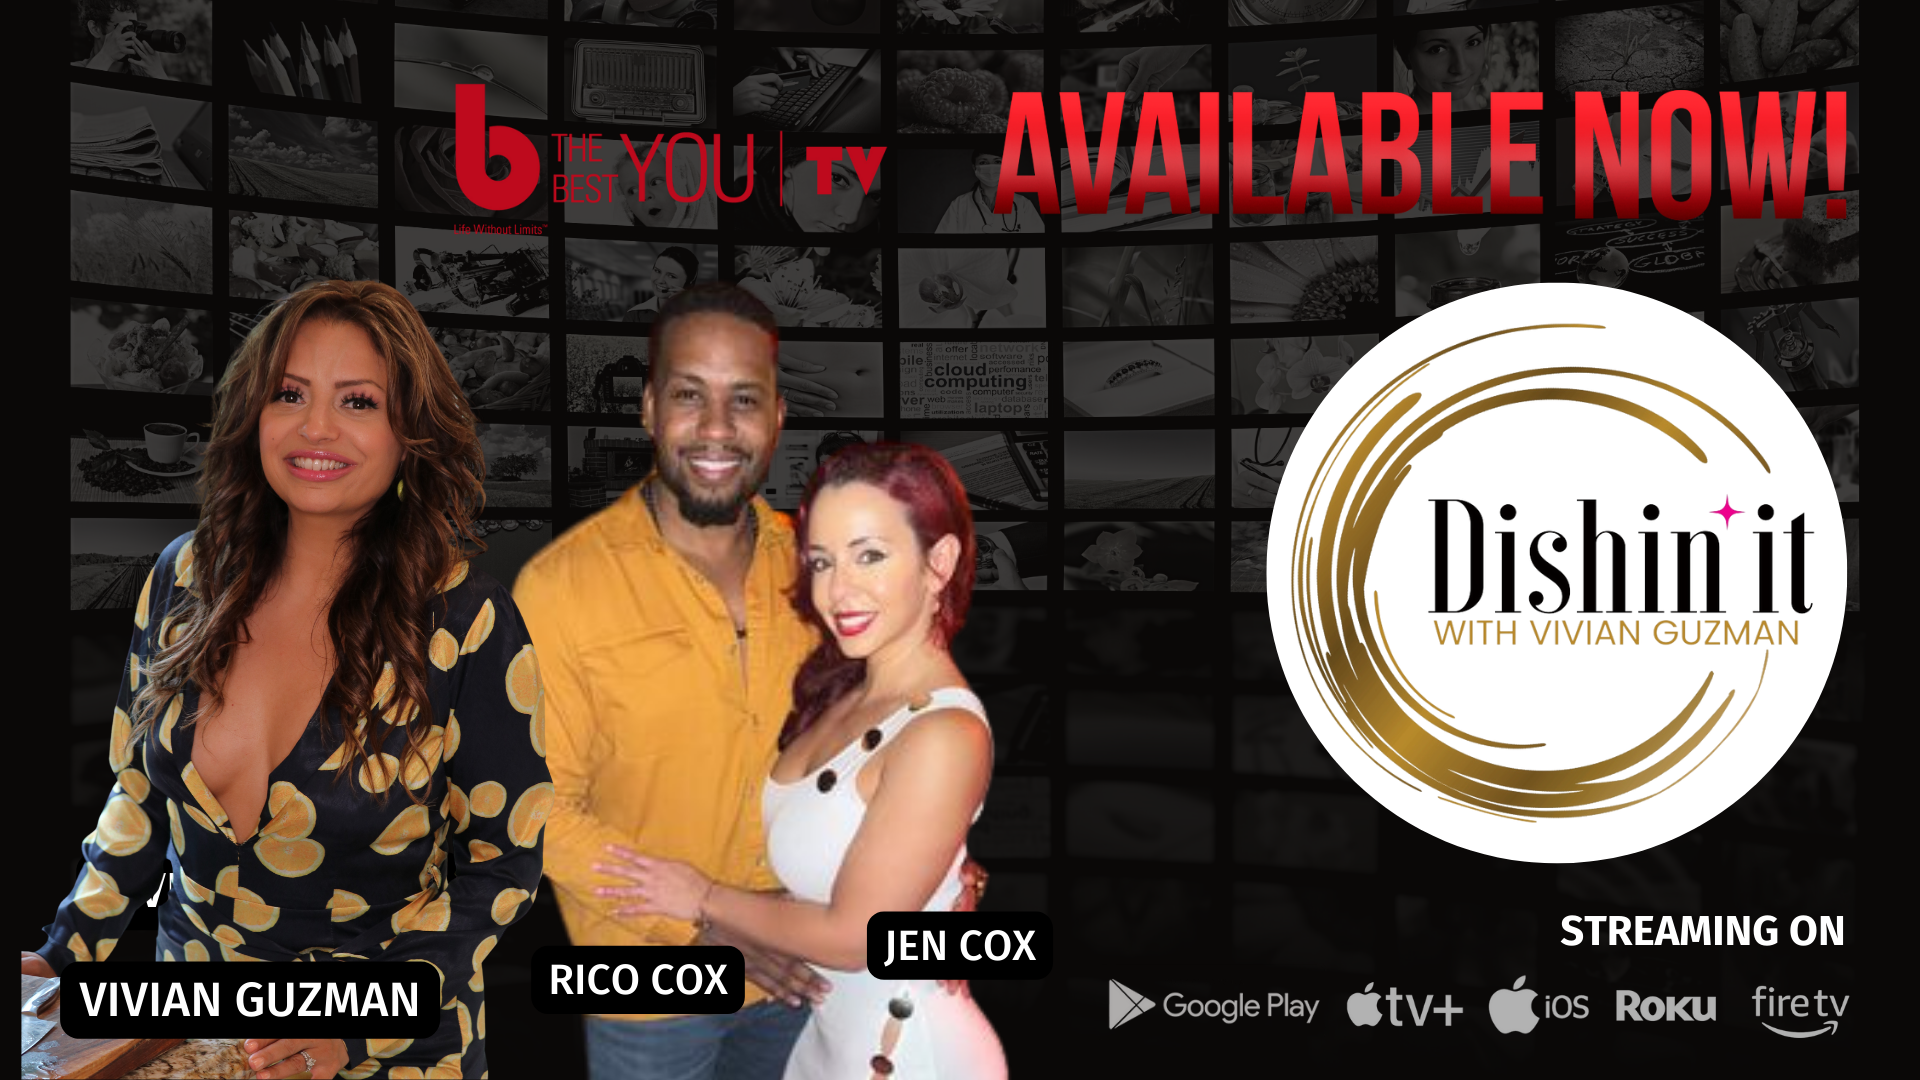 Dishin'it with Vivian Guzman - Rico & Jen Cox